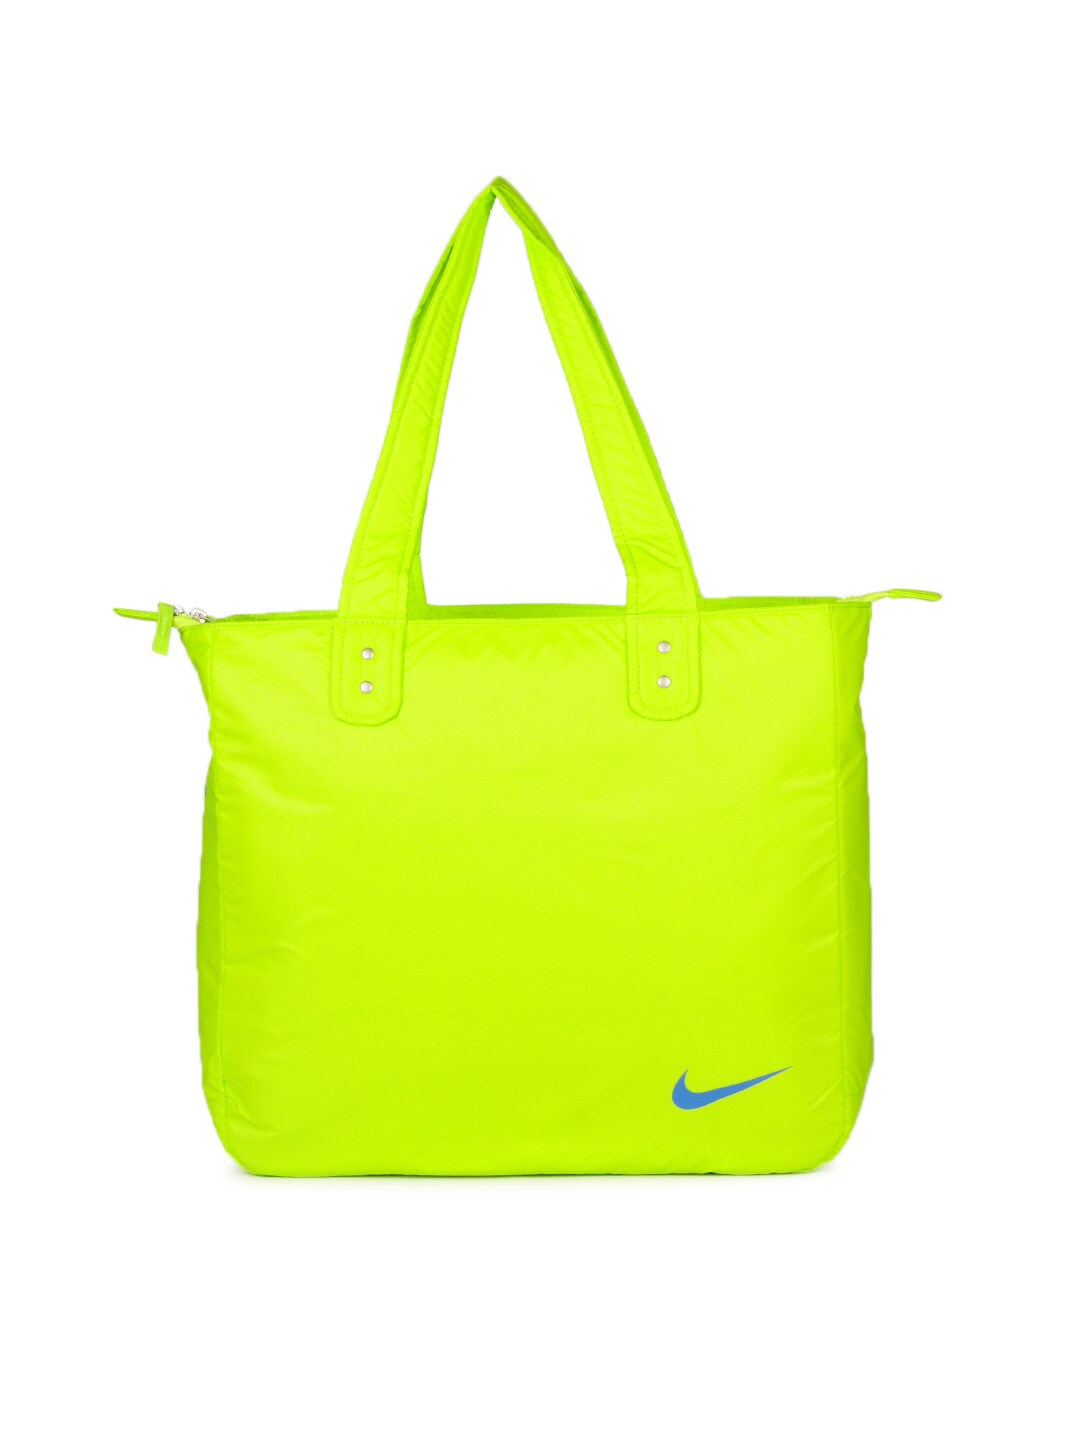 Nike Fluorescent Green Tote Bag